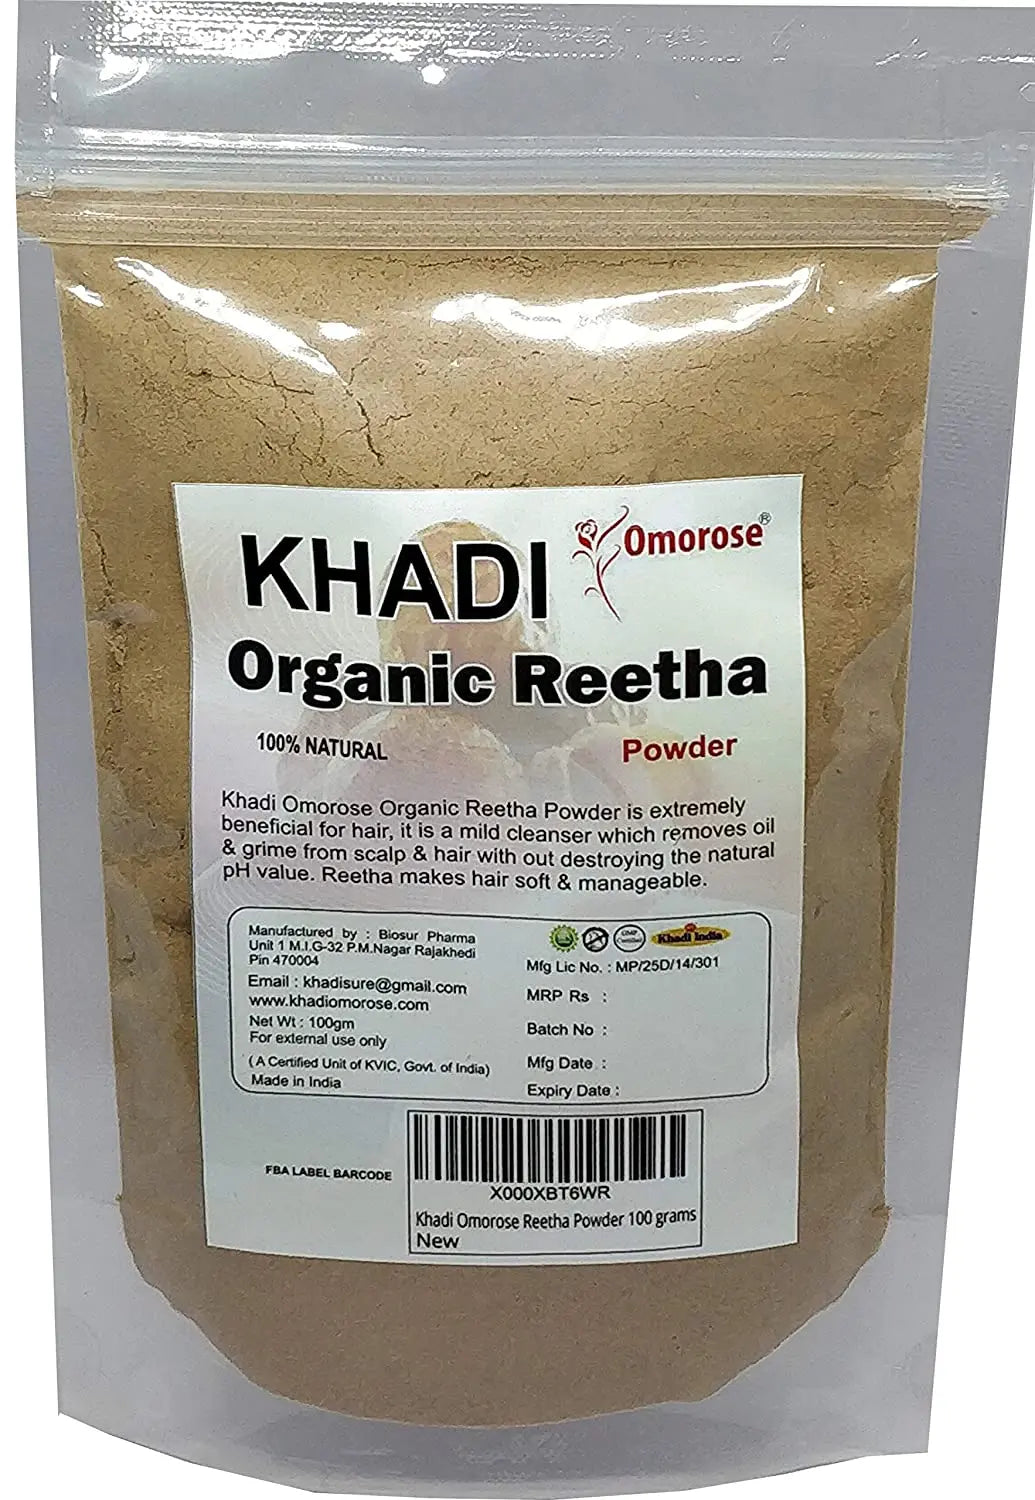 Khadi Omorose Organic Reetha Powder 100gm Khadi Omorose